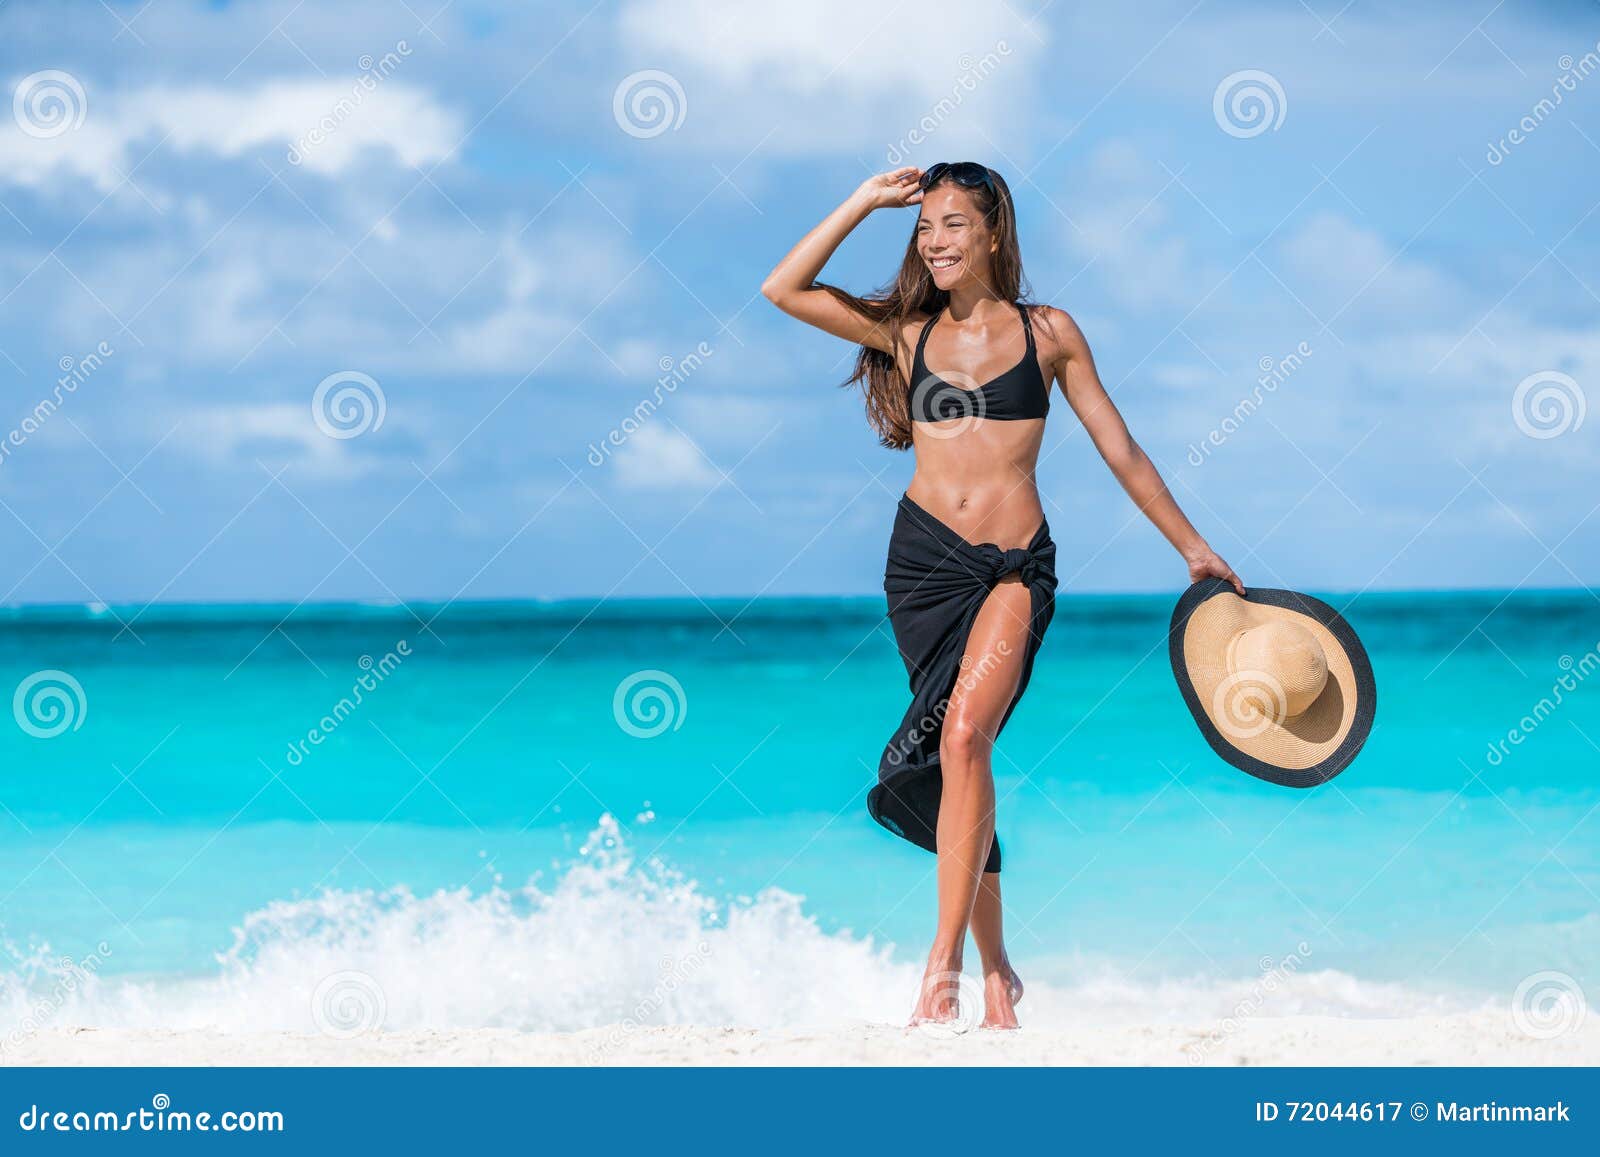 Woman walking on beach in blue fashion beachwear bathing suit and